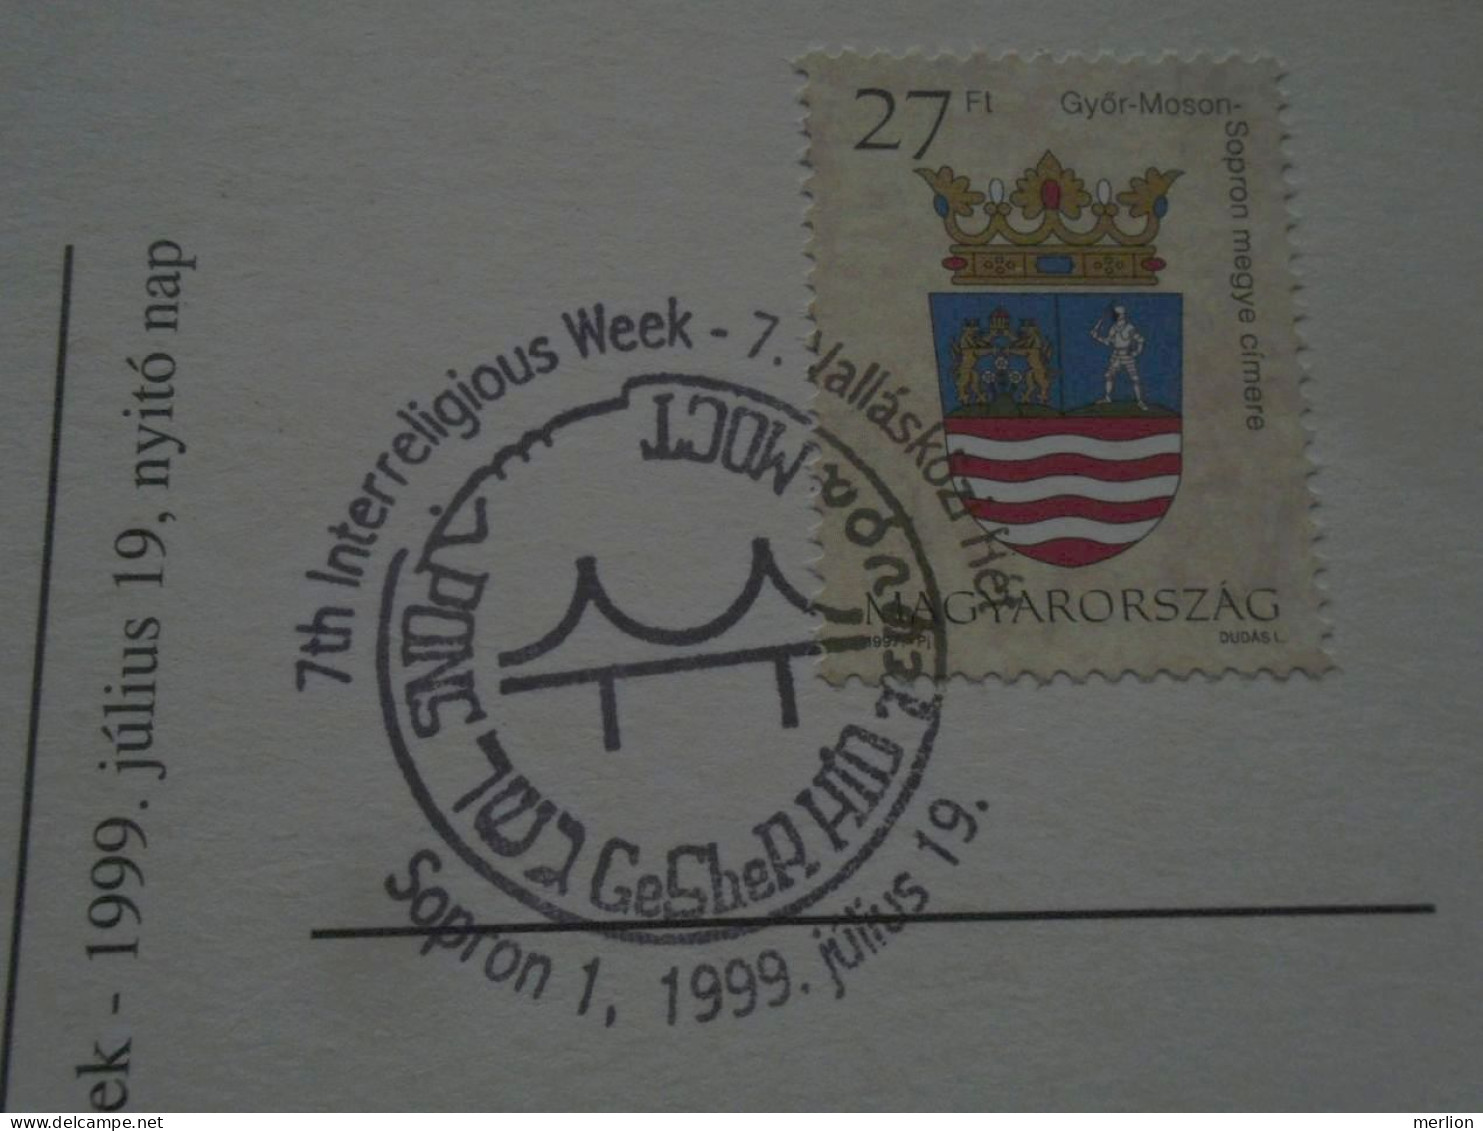 D201009  Hungary  Sopron  - Special Postmark - Interfaith Week Sopron - Jewish Day 1999 Gesher Híd - Jewish